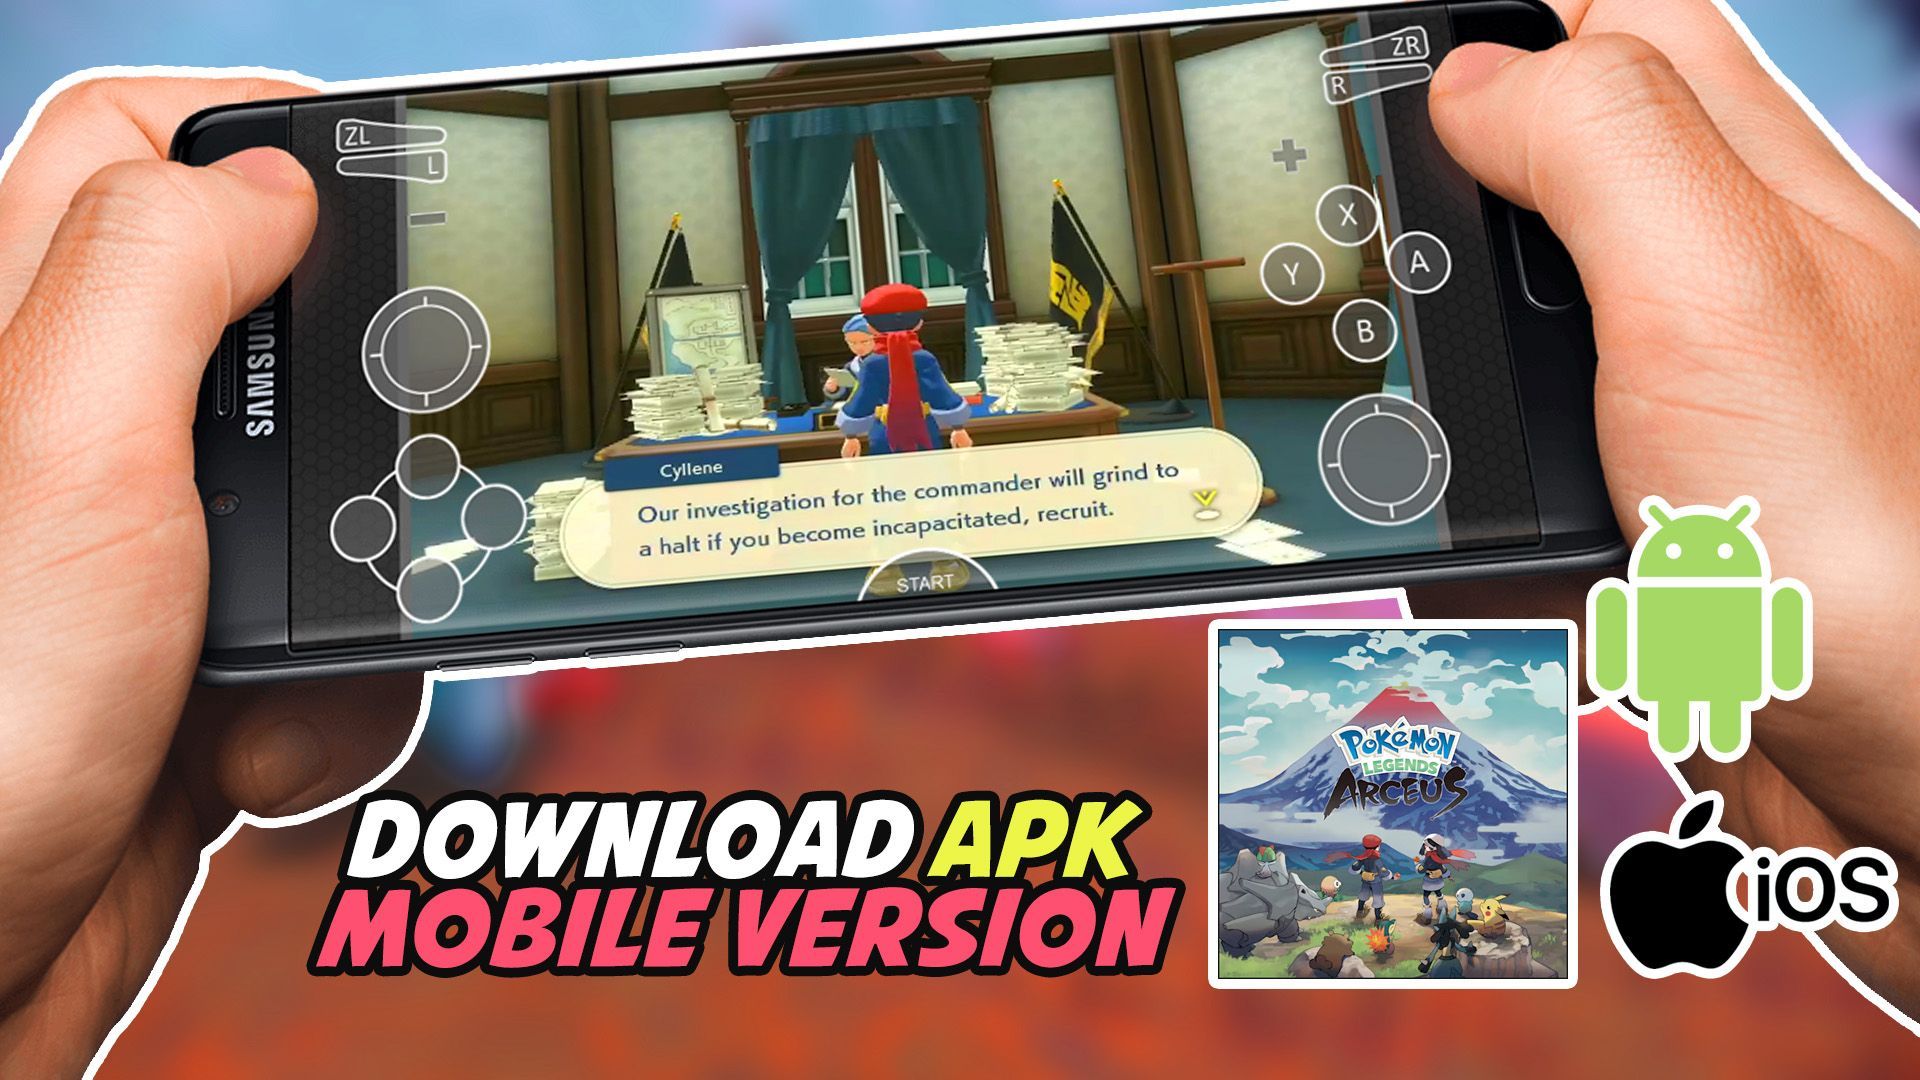 LATEST] Pokemon Legends Arceus Android, iOS, APK Download